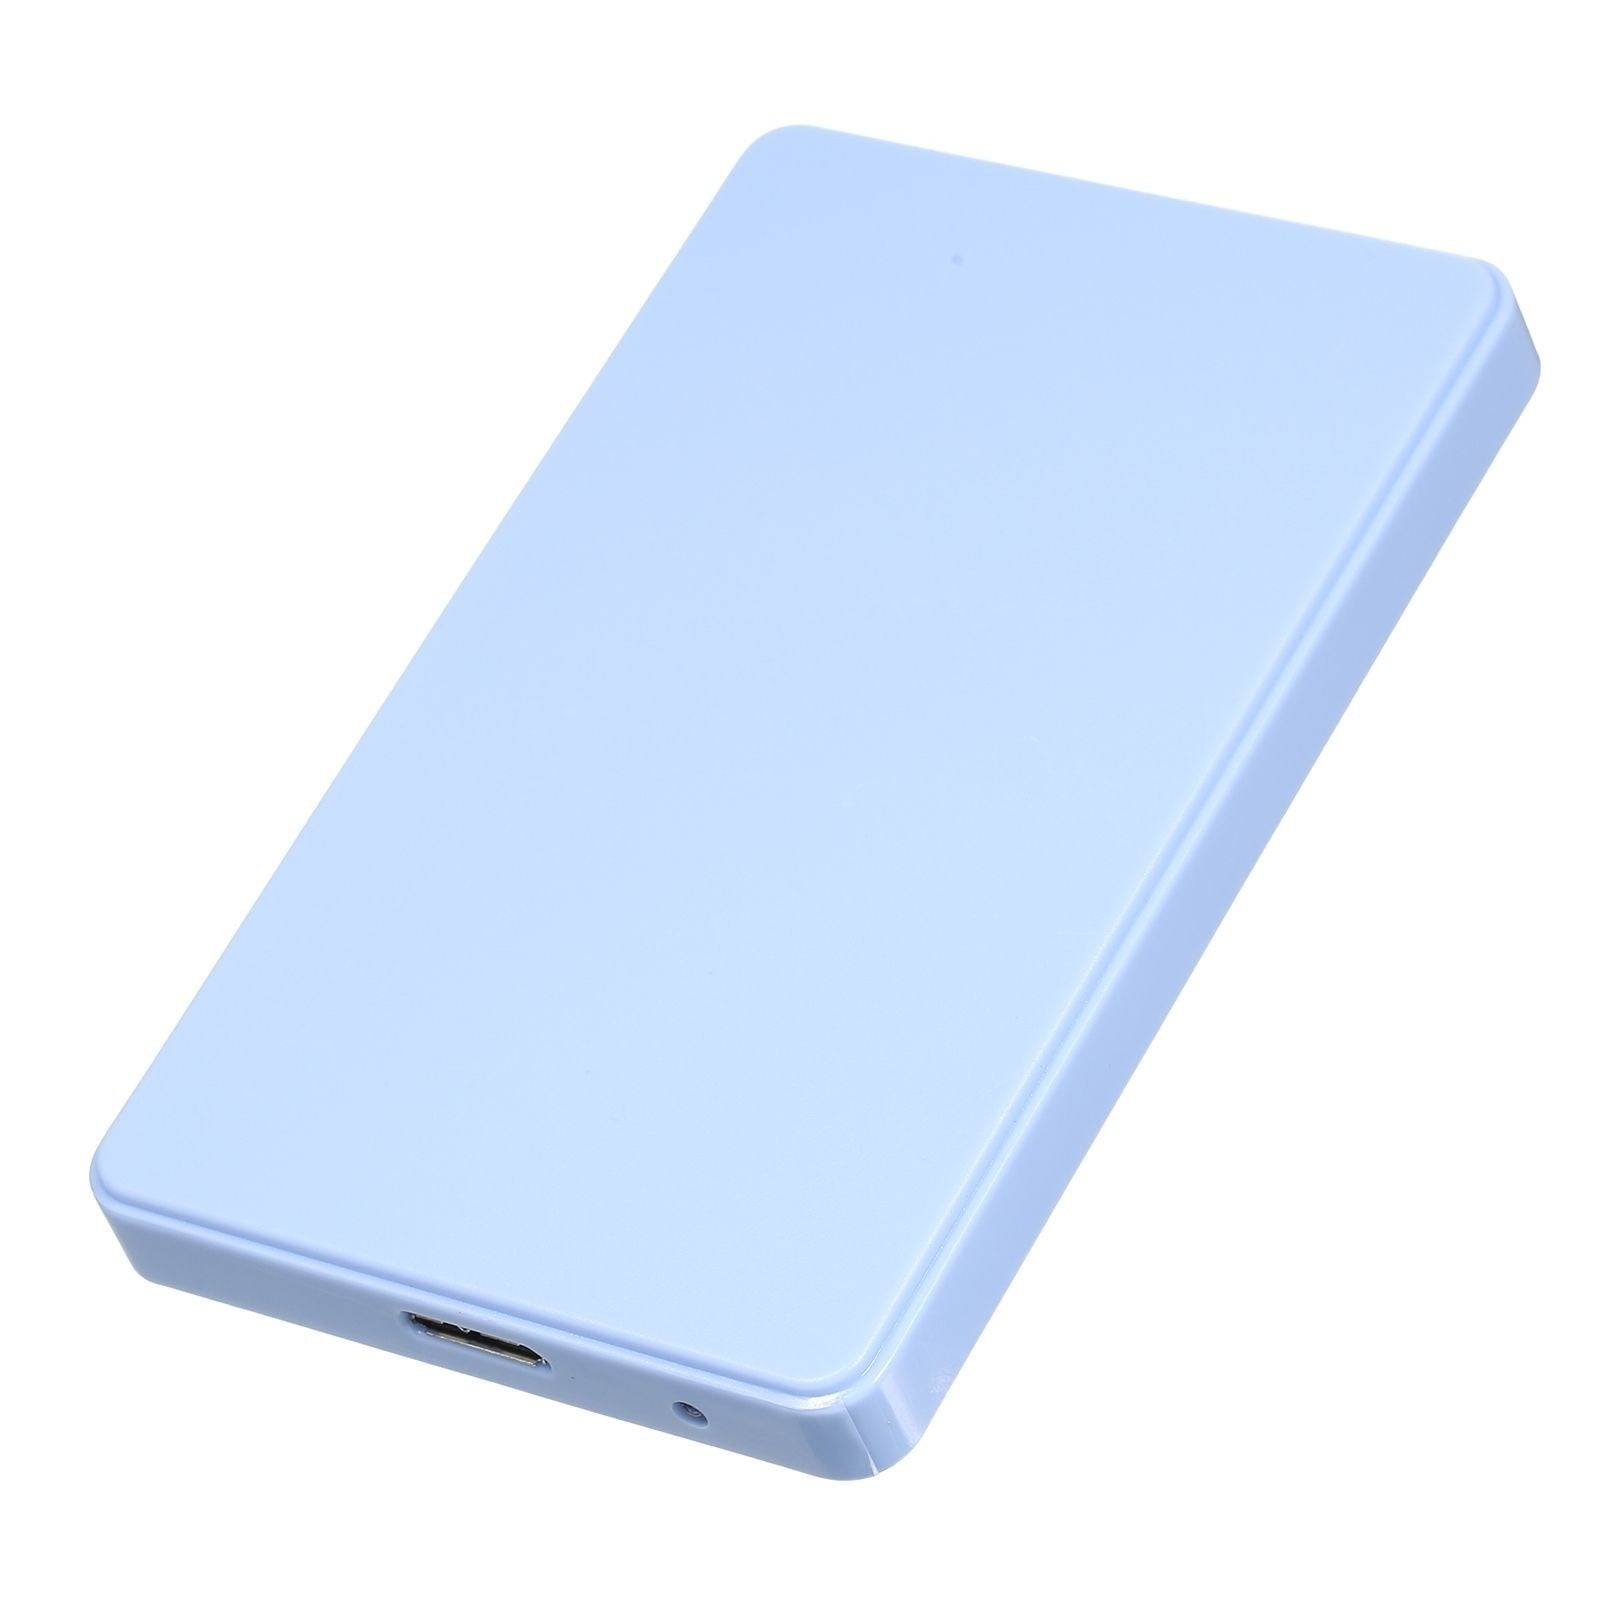 2.5 inch Hard Disk Case USB3.0 High-speed 5Gpbs Transmission External Enclosure SATA Hard Drive Case Support 2.5inch 7/9.5mm SATA HDD/SSD - Blue